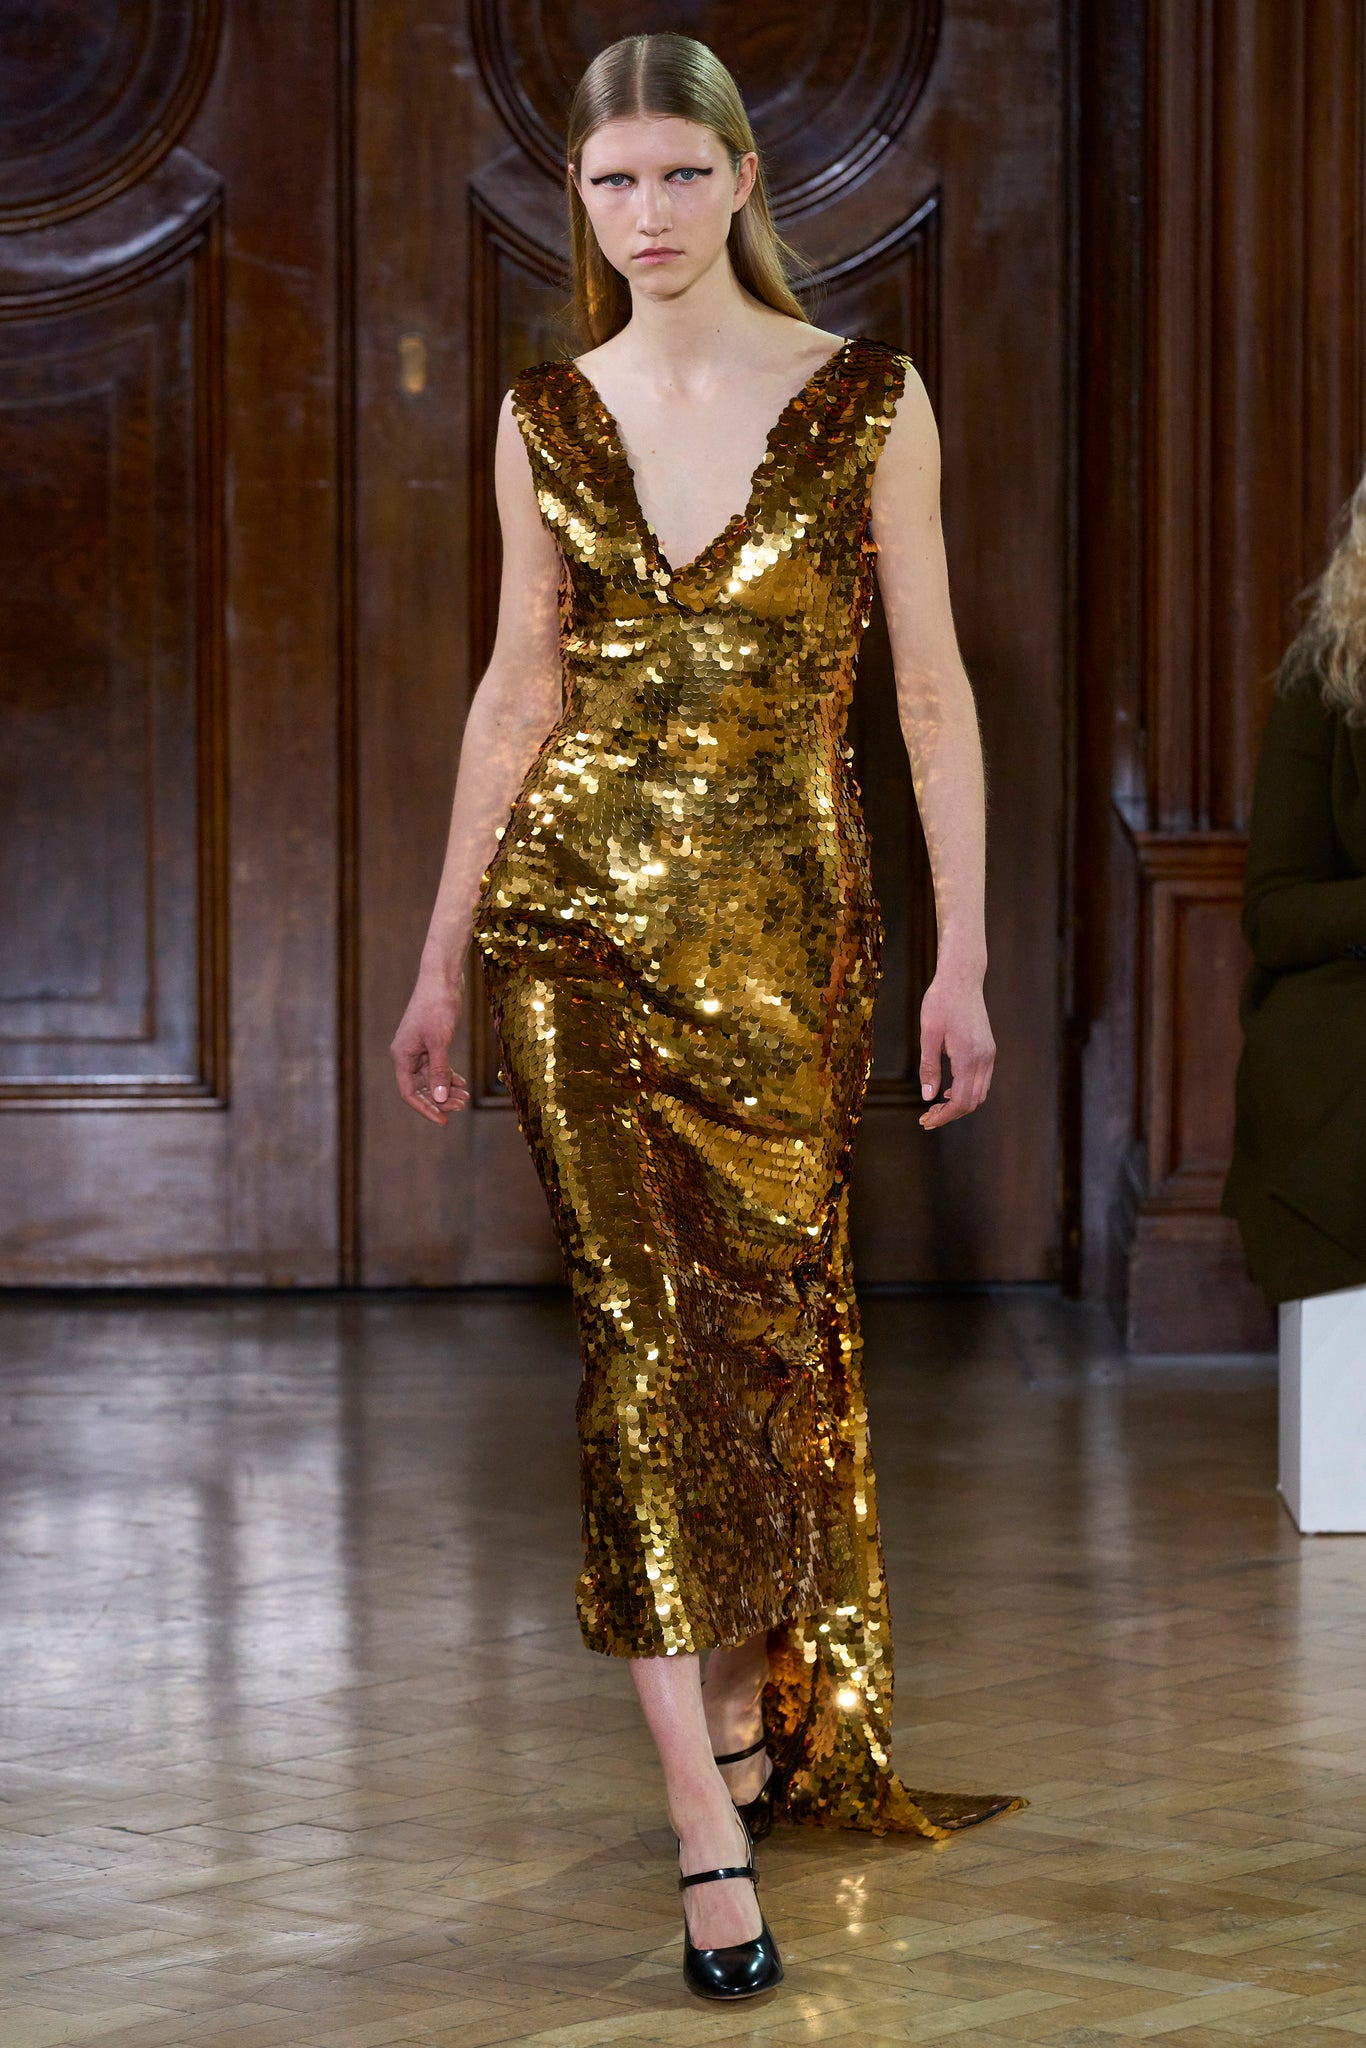 Jacira Dress in Gold Paillette Sequins